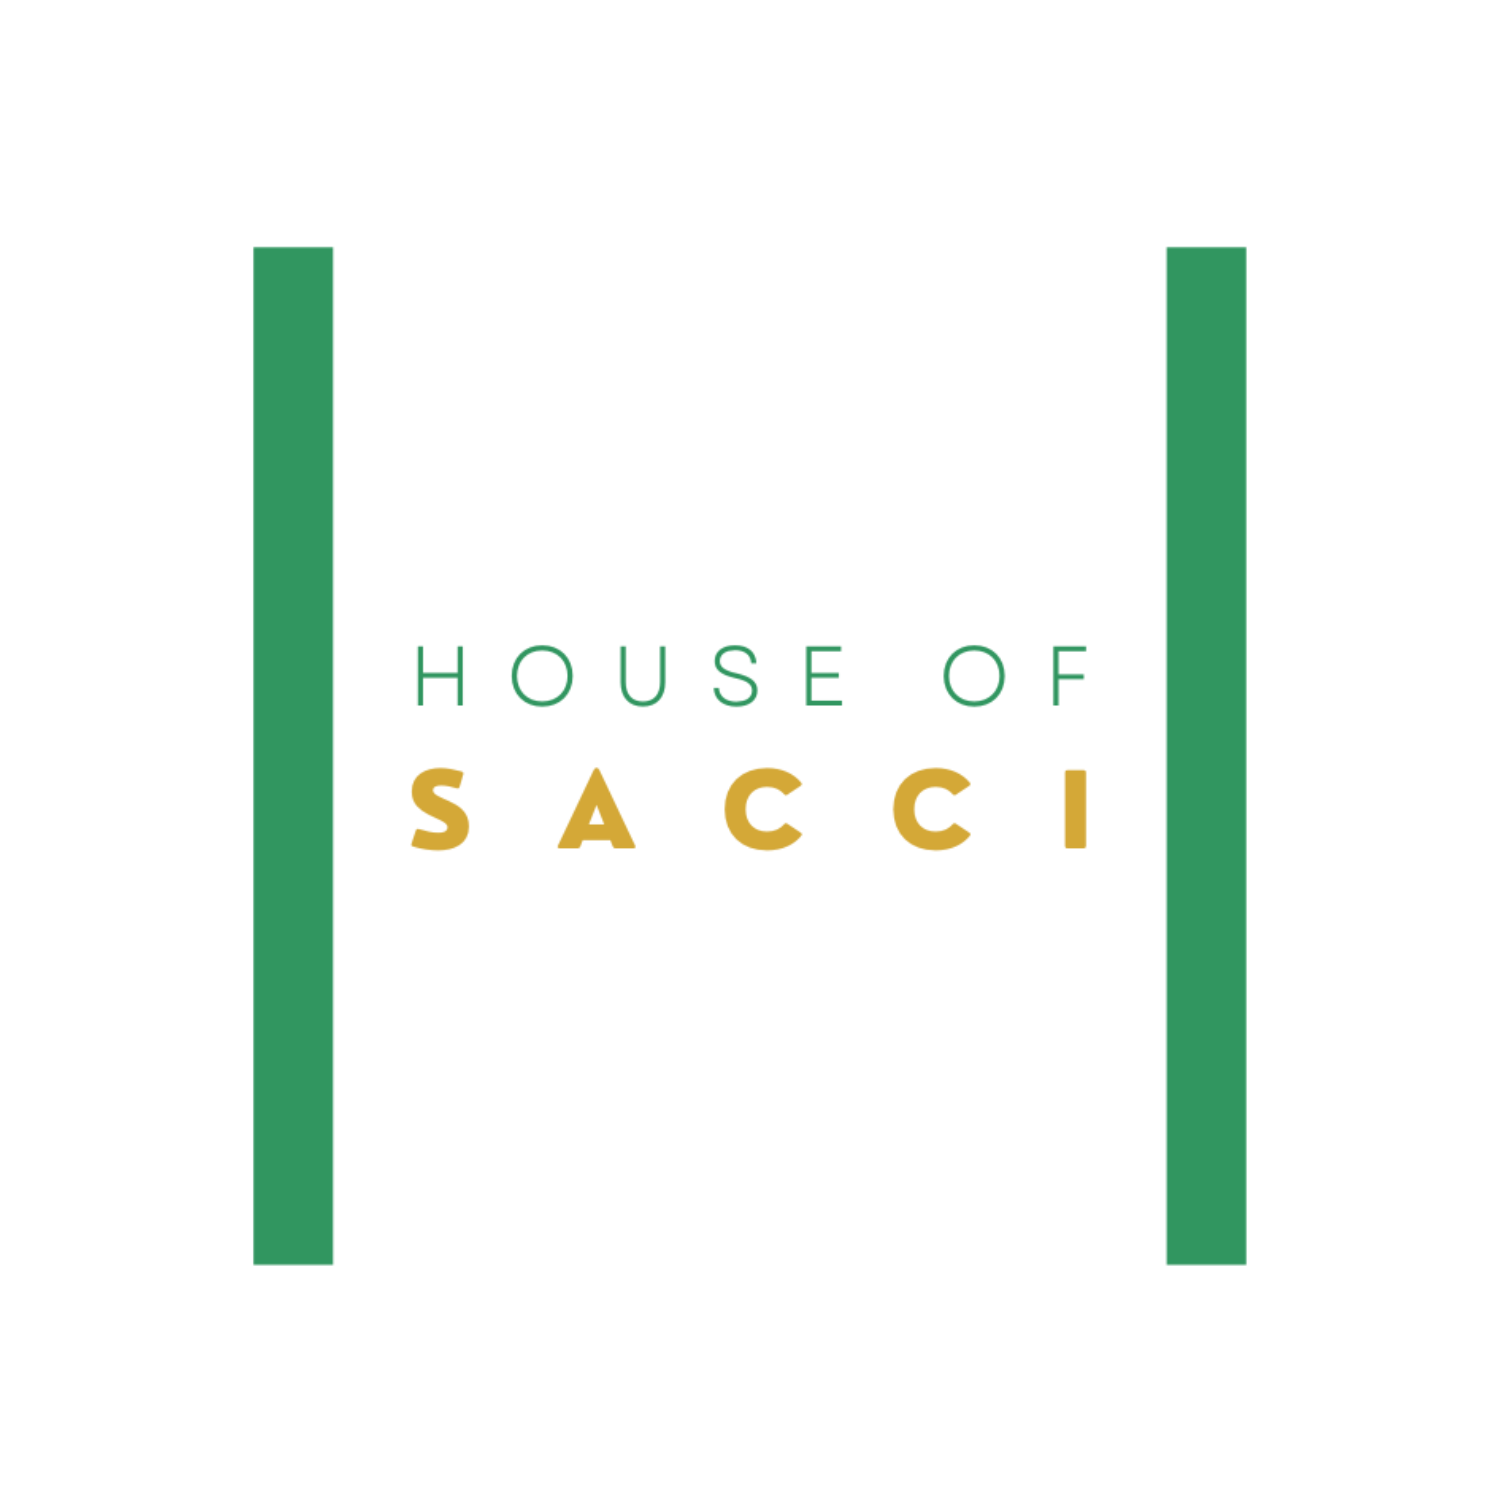 HOUSE OF SACCI